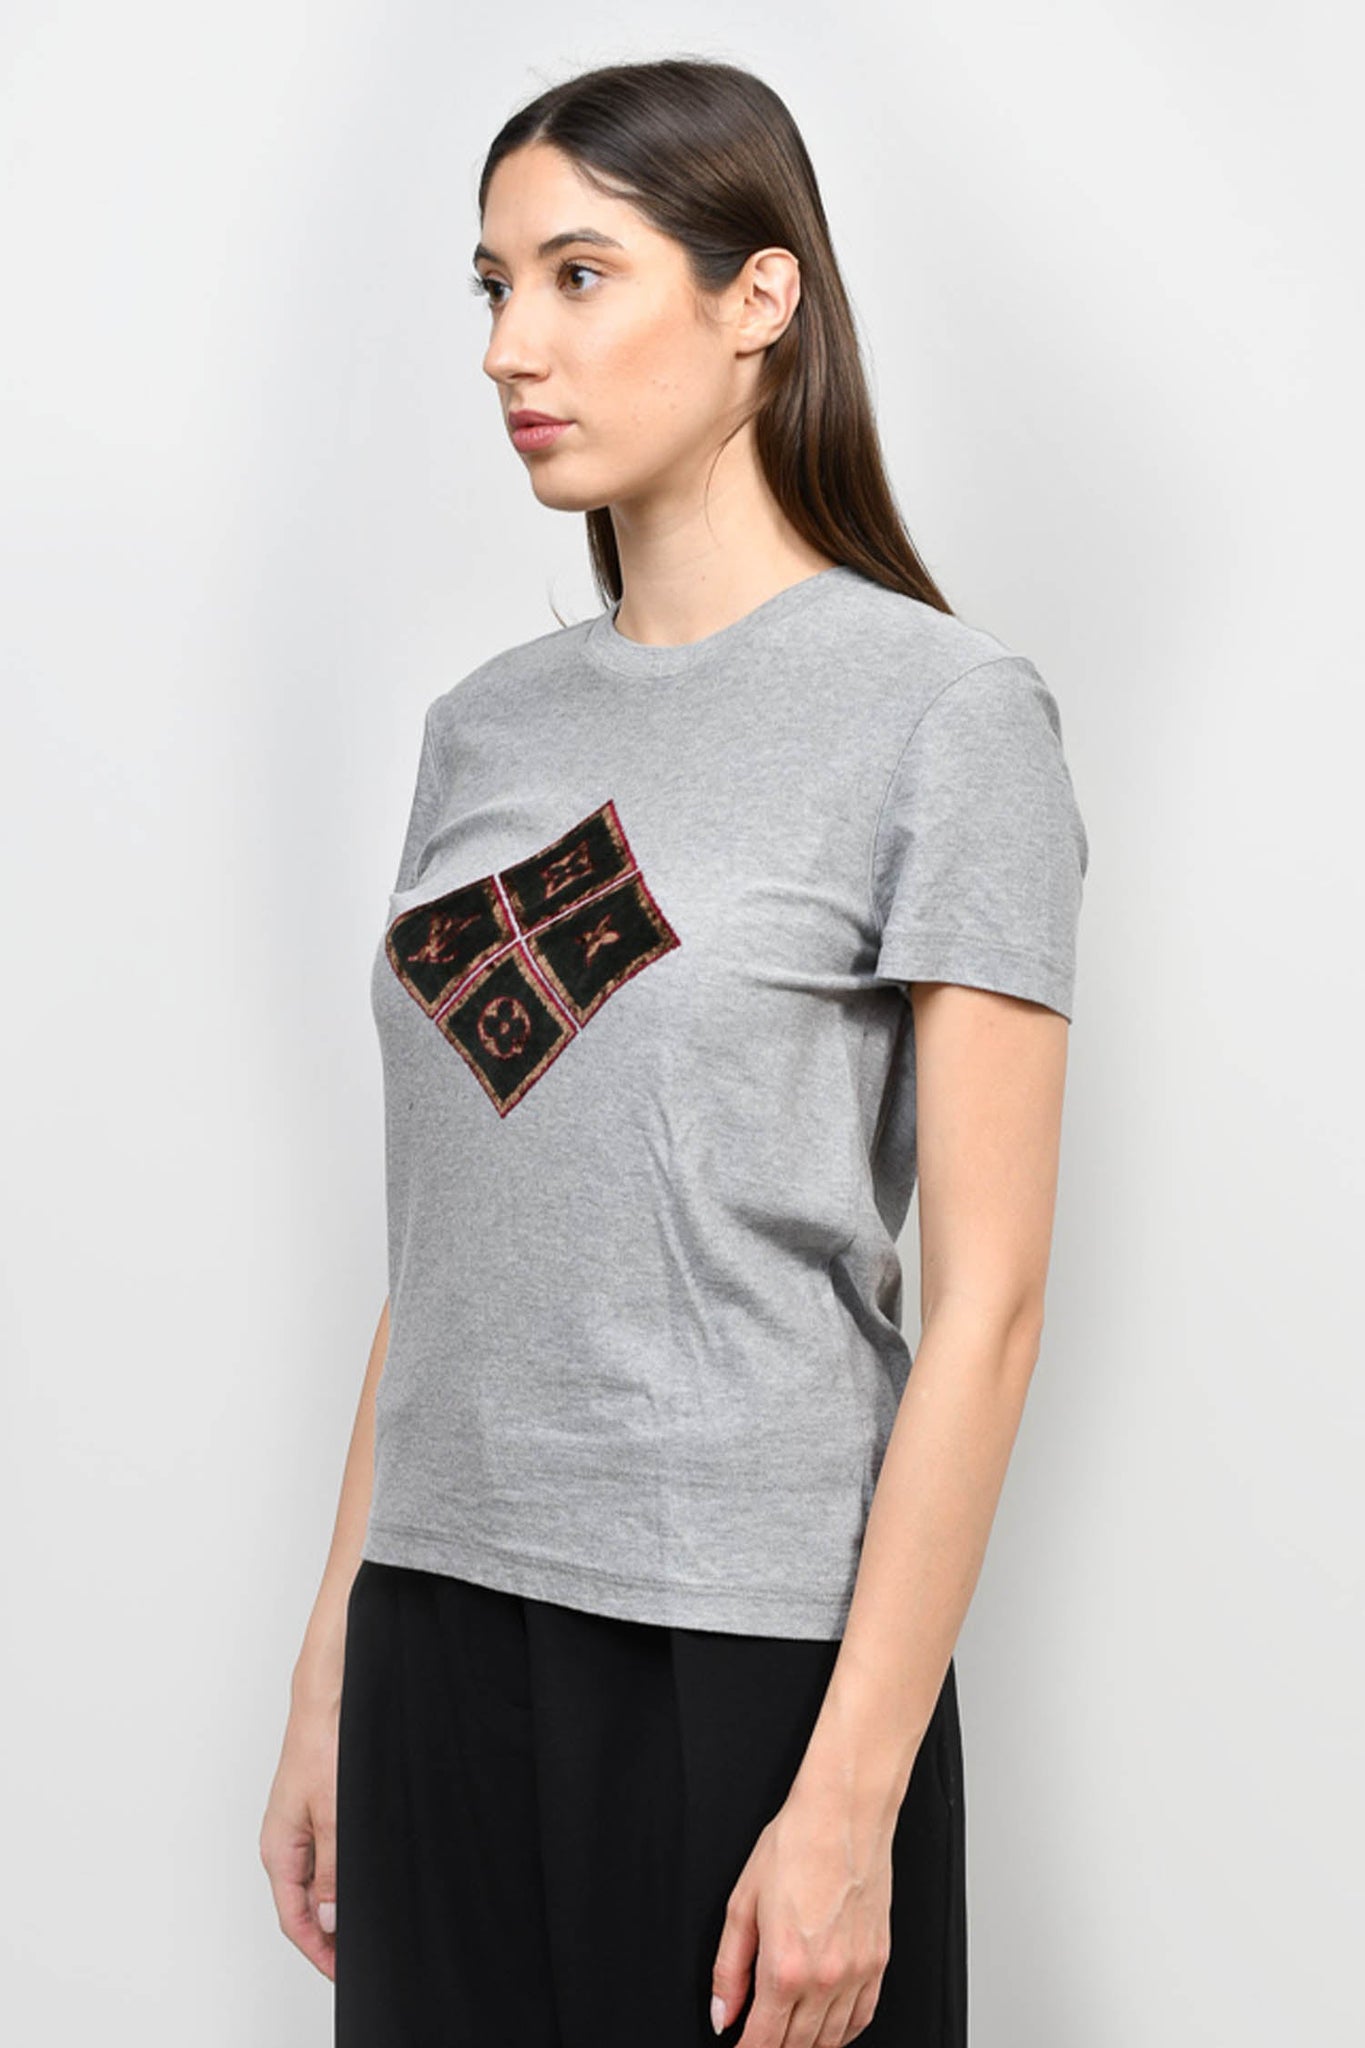 T-shirt Disney x Gucci White size S International in Cotton - 28393256